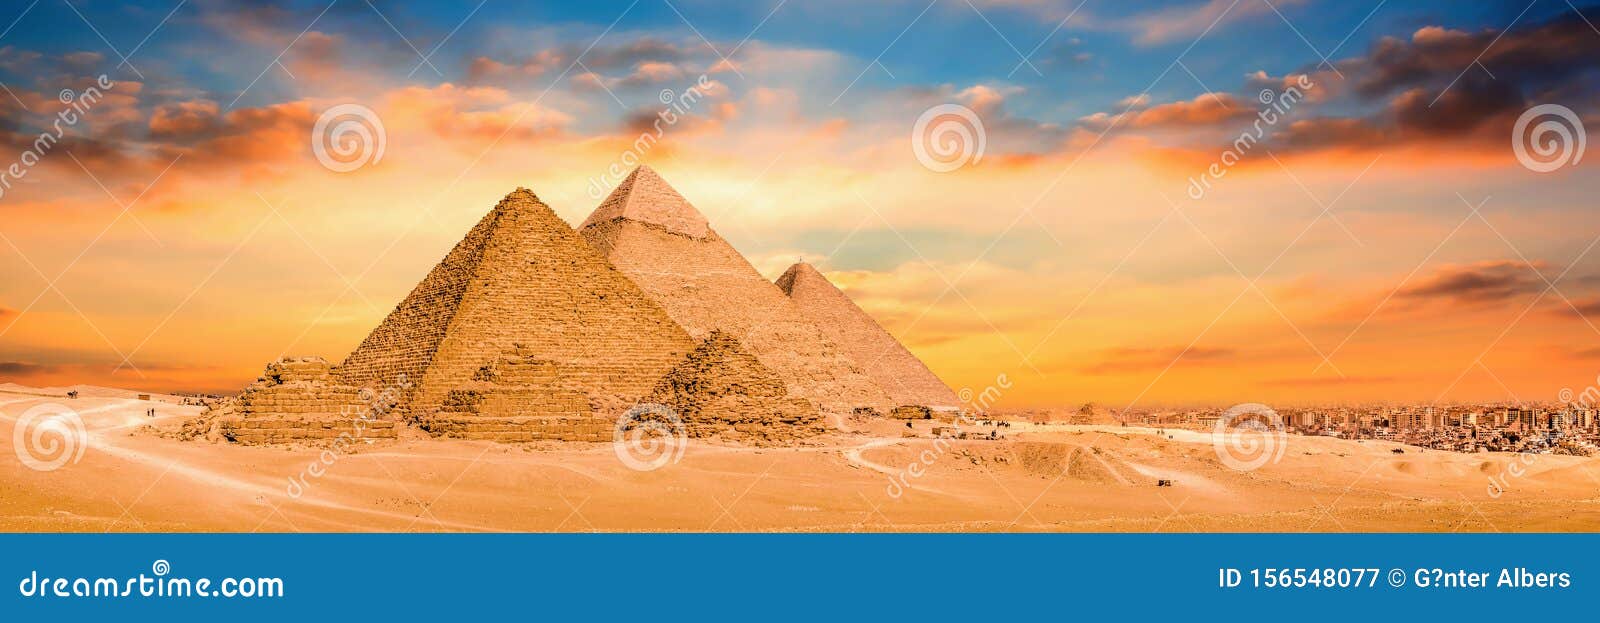 great pyramids of giza, egypt